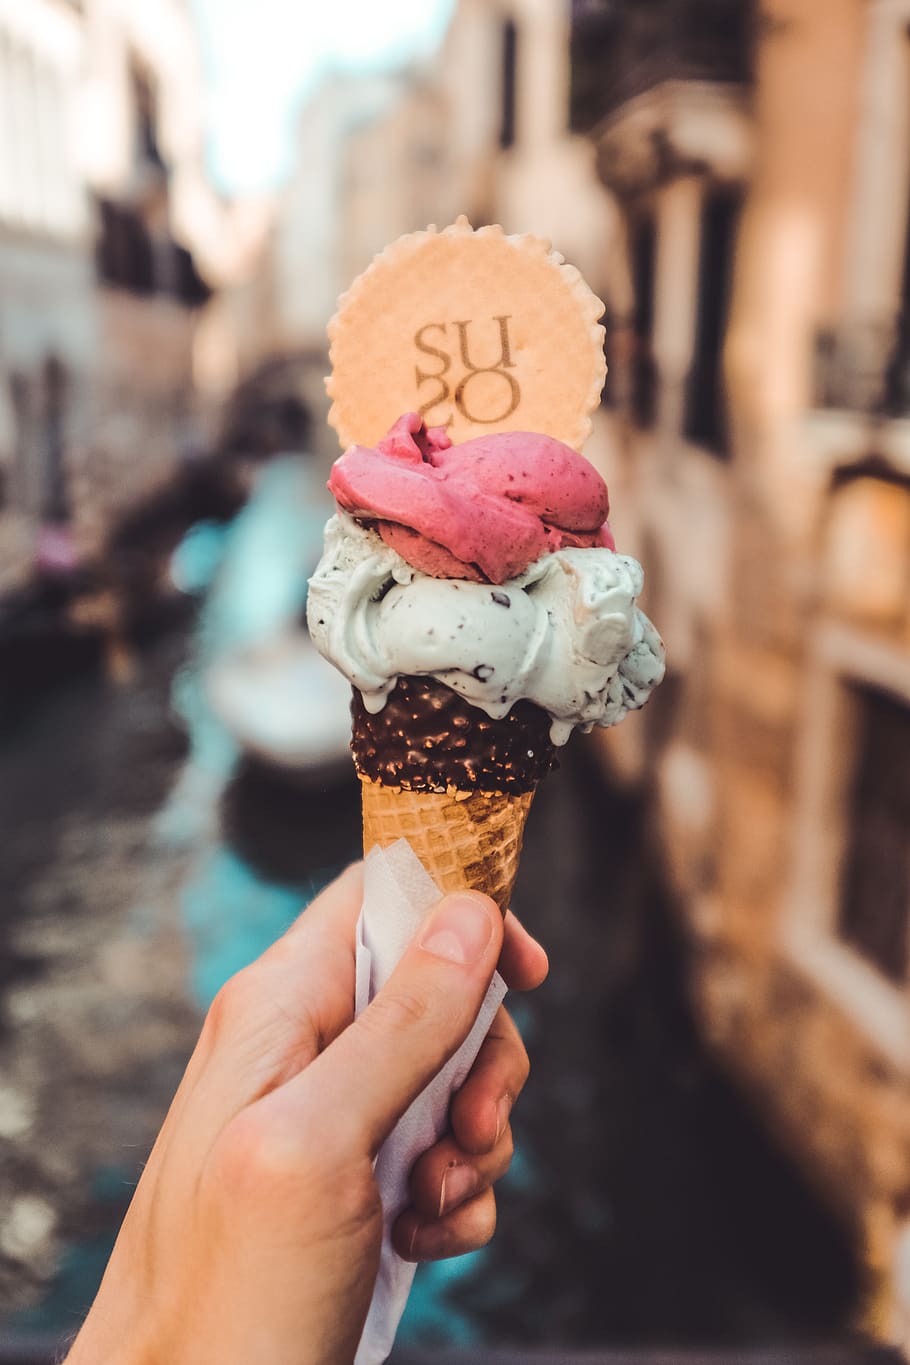 italy, san marco, venezia, suso, ice-cream, cone, scoops, summer